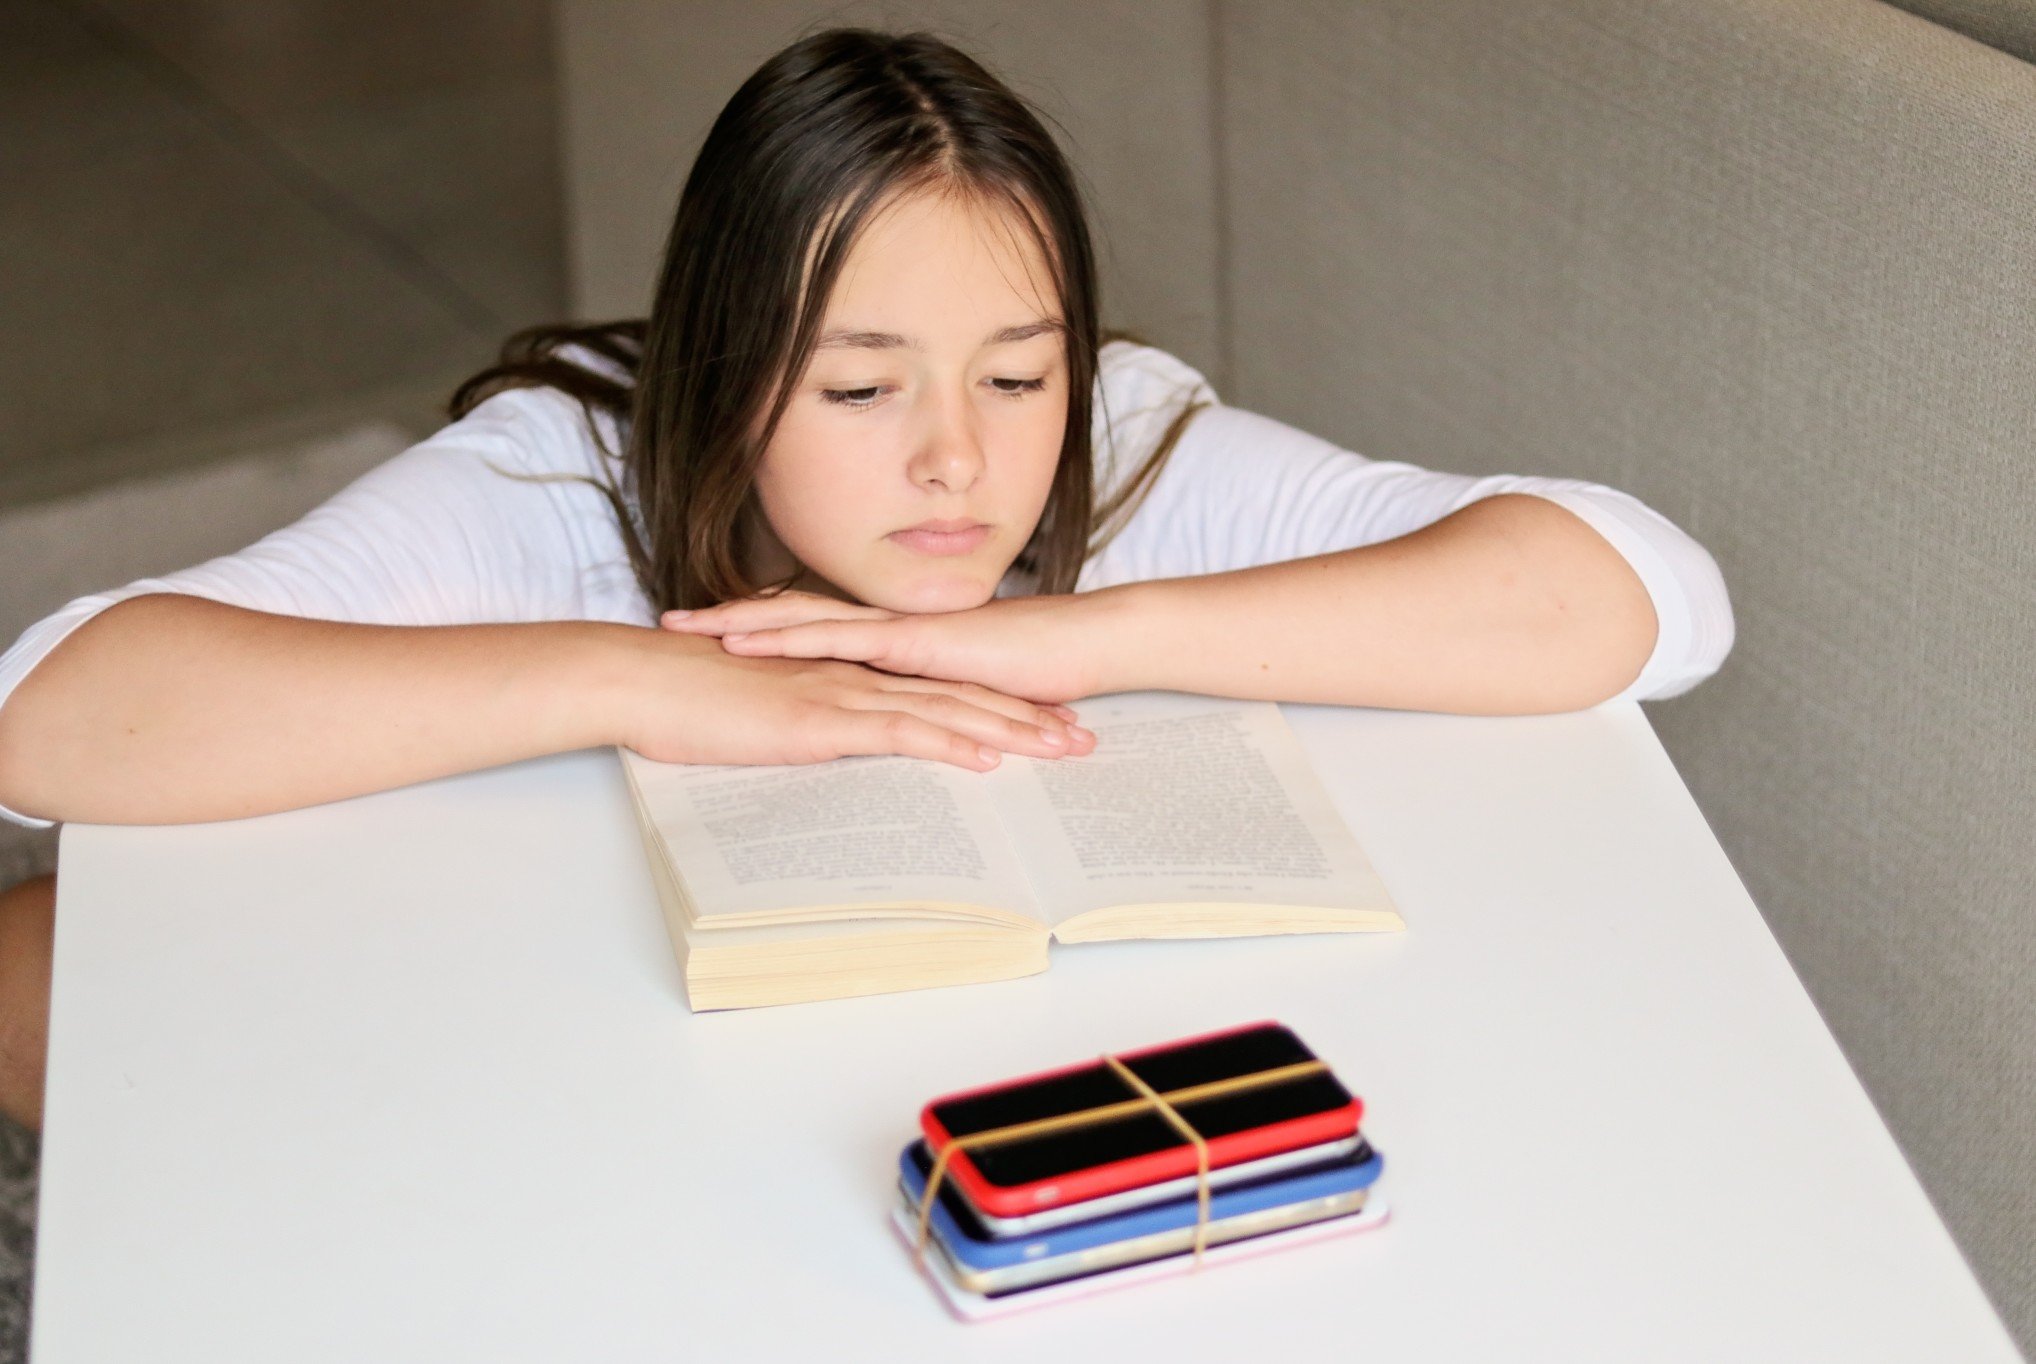 social-media-and-gadget-detox-sad-preteen-girl-reading-book-and-looking-at-pile-of-smartphones-at_t20_Oz4JPp.jpg